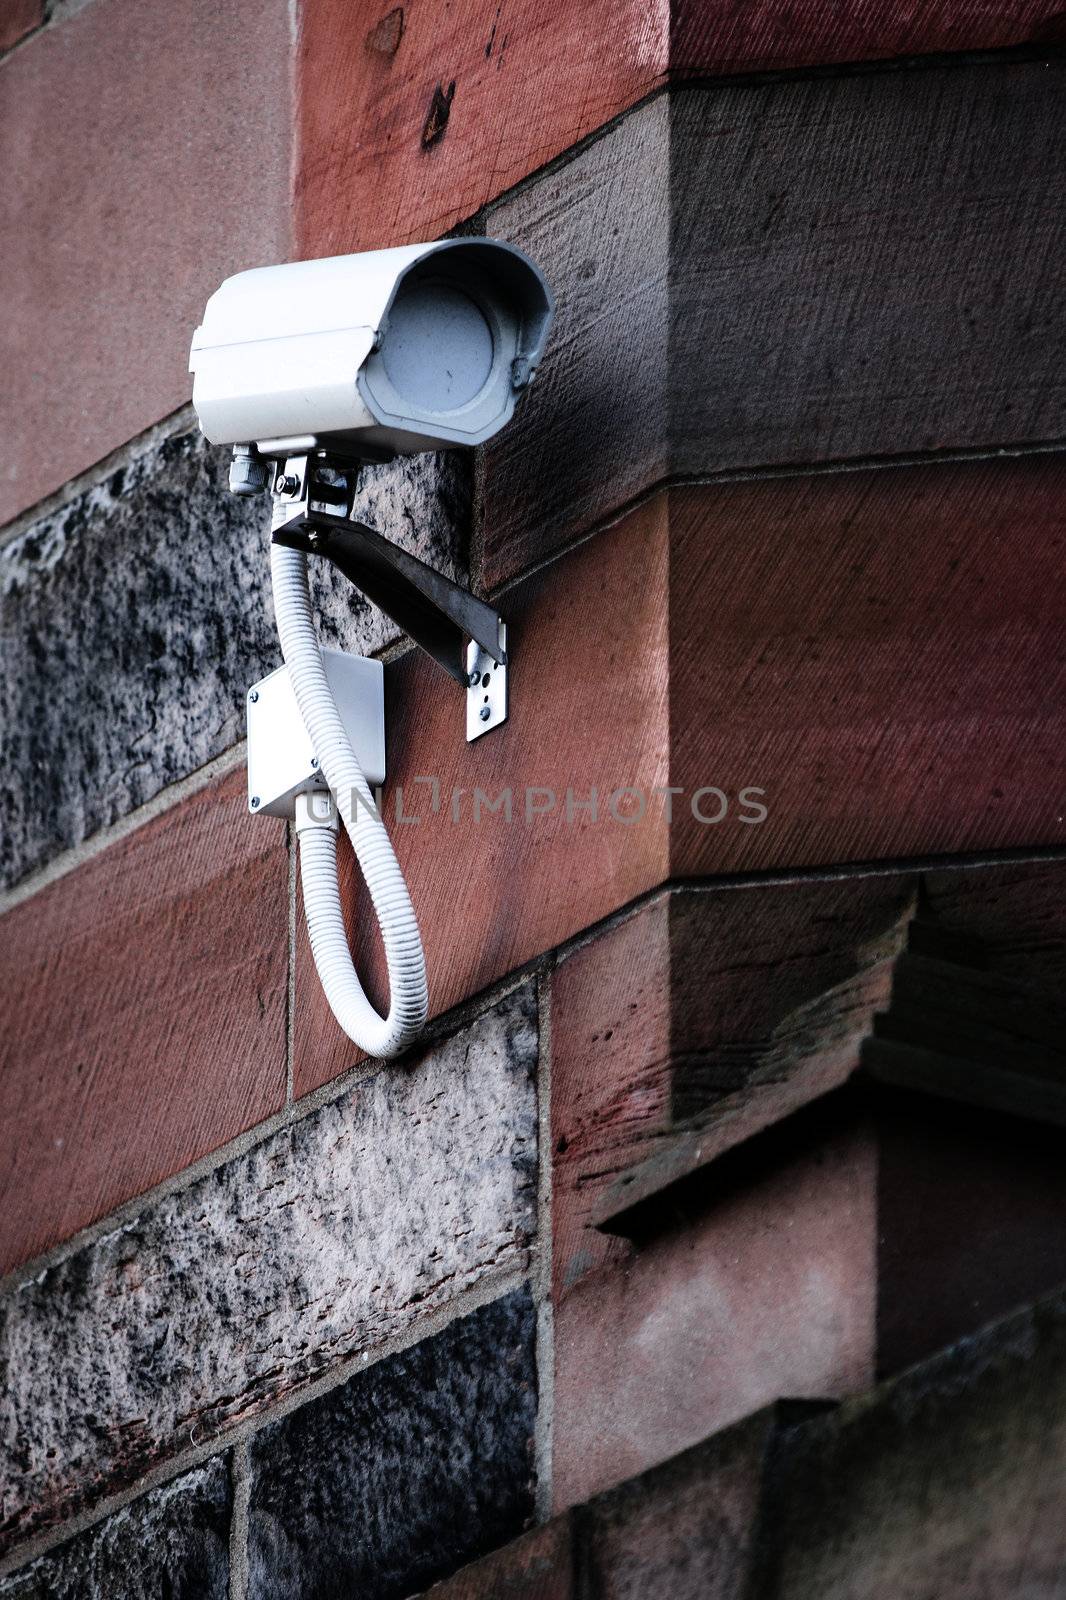 Decoy CCTV by nowoka1na